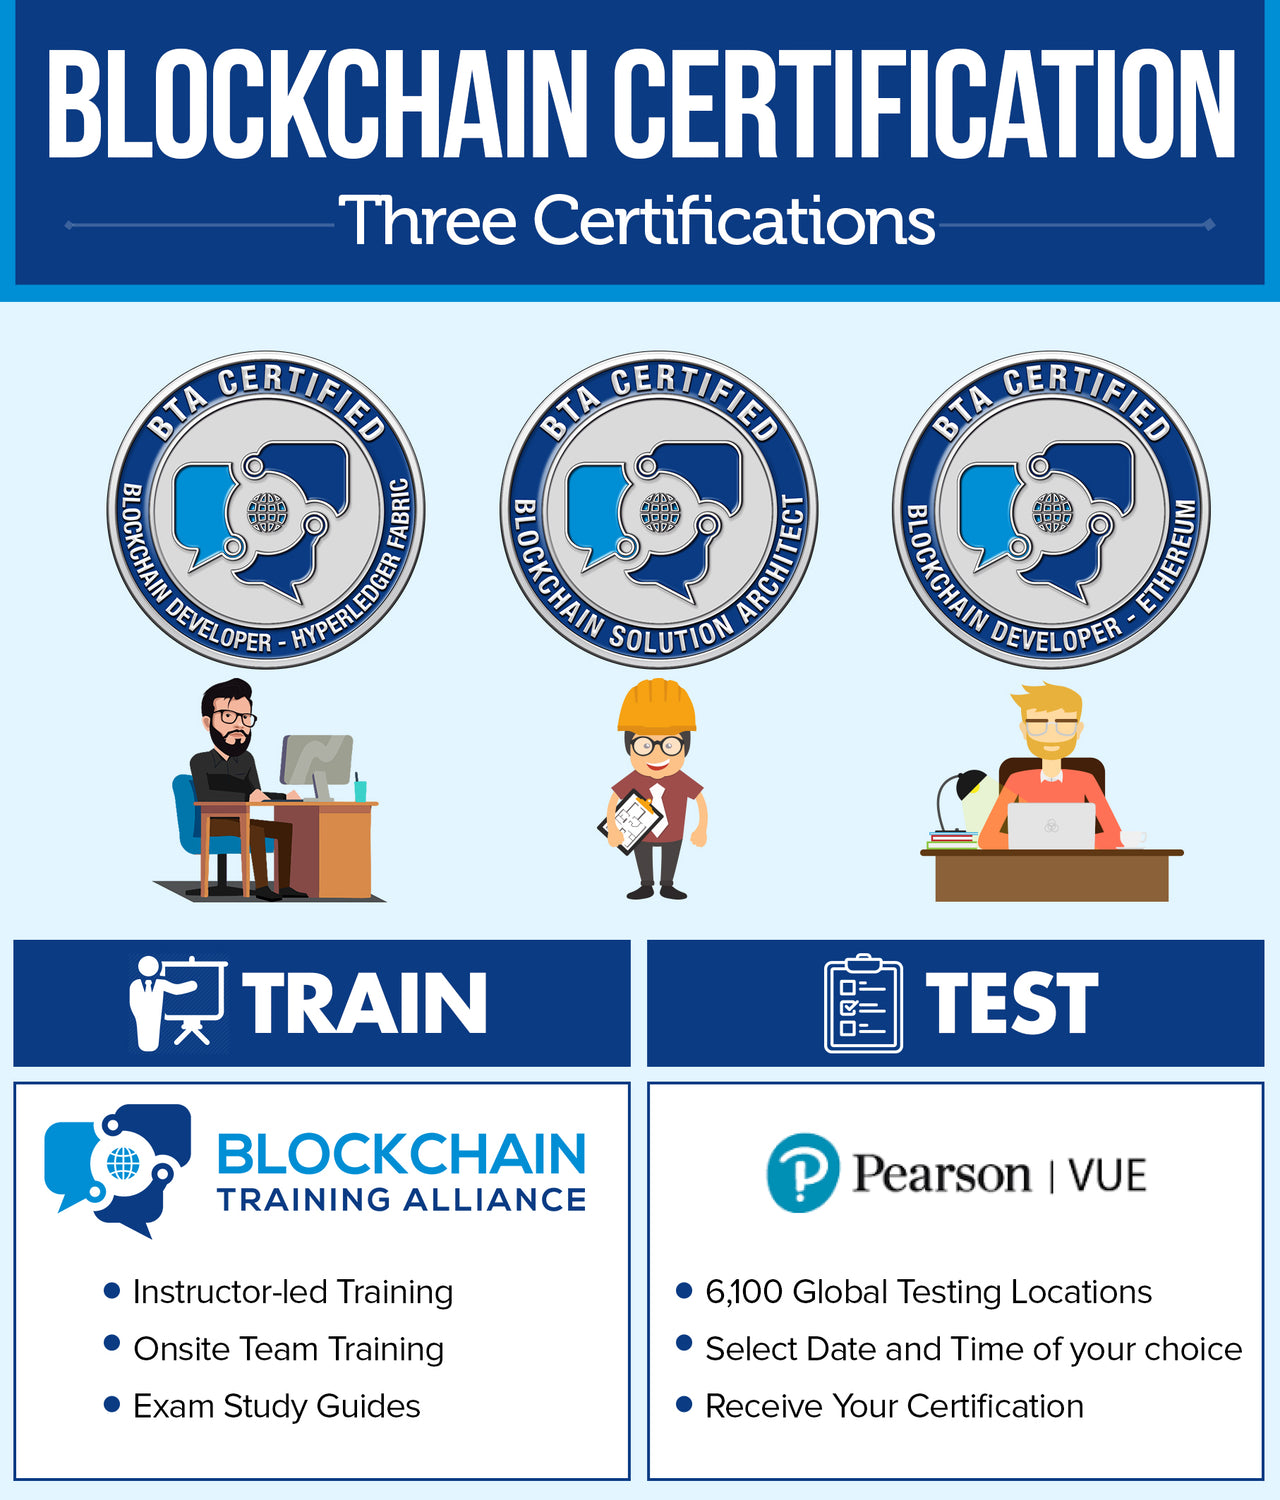 Blockchain Certification - Three Certifications